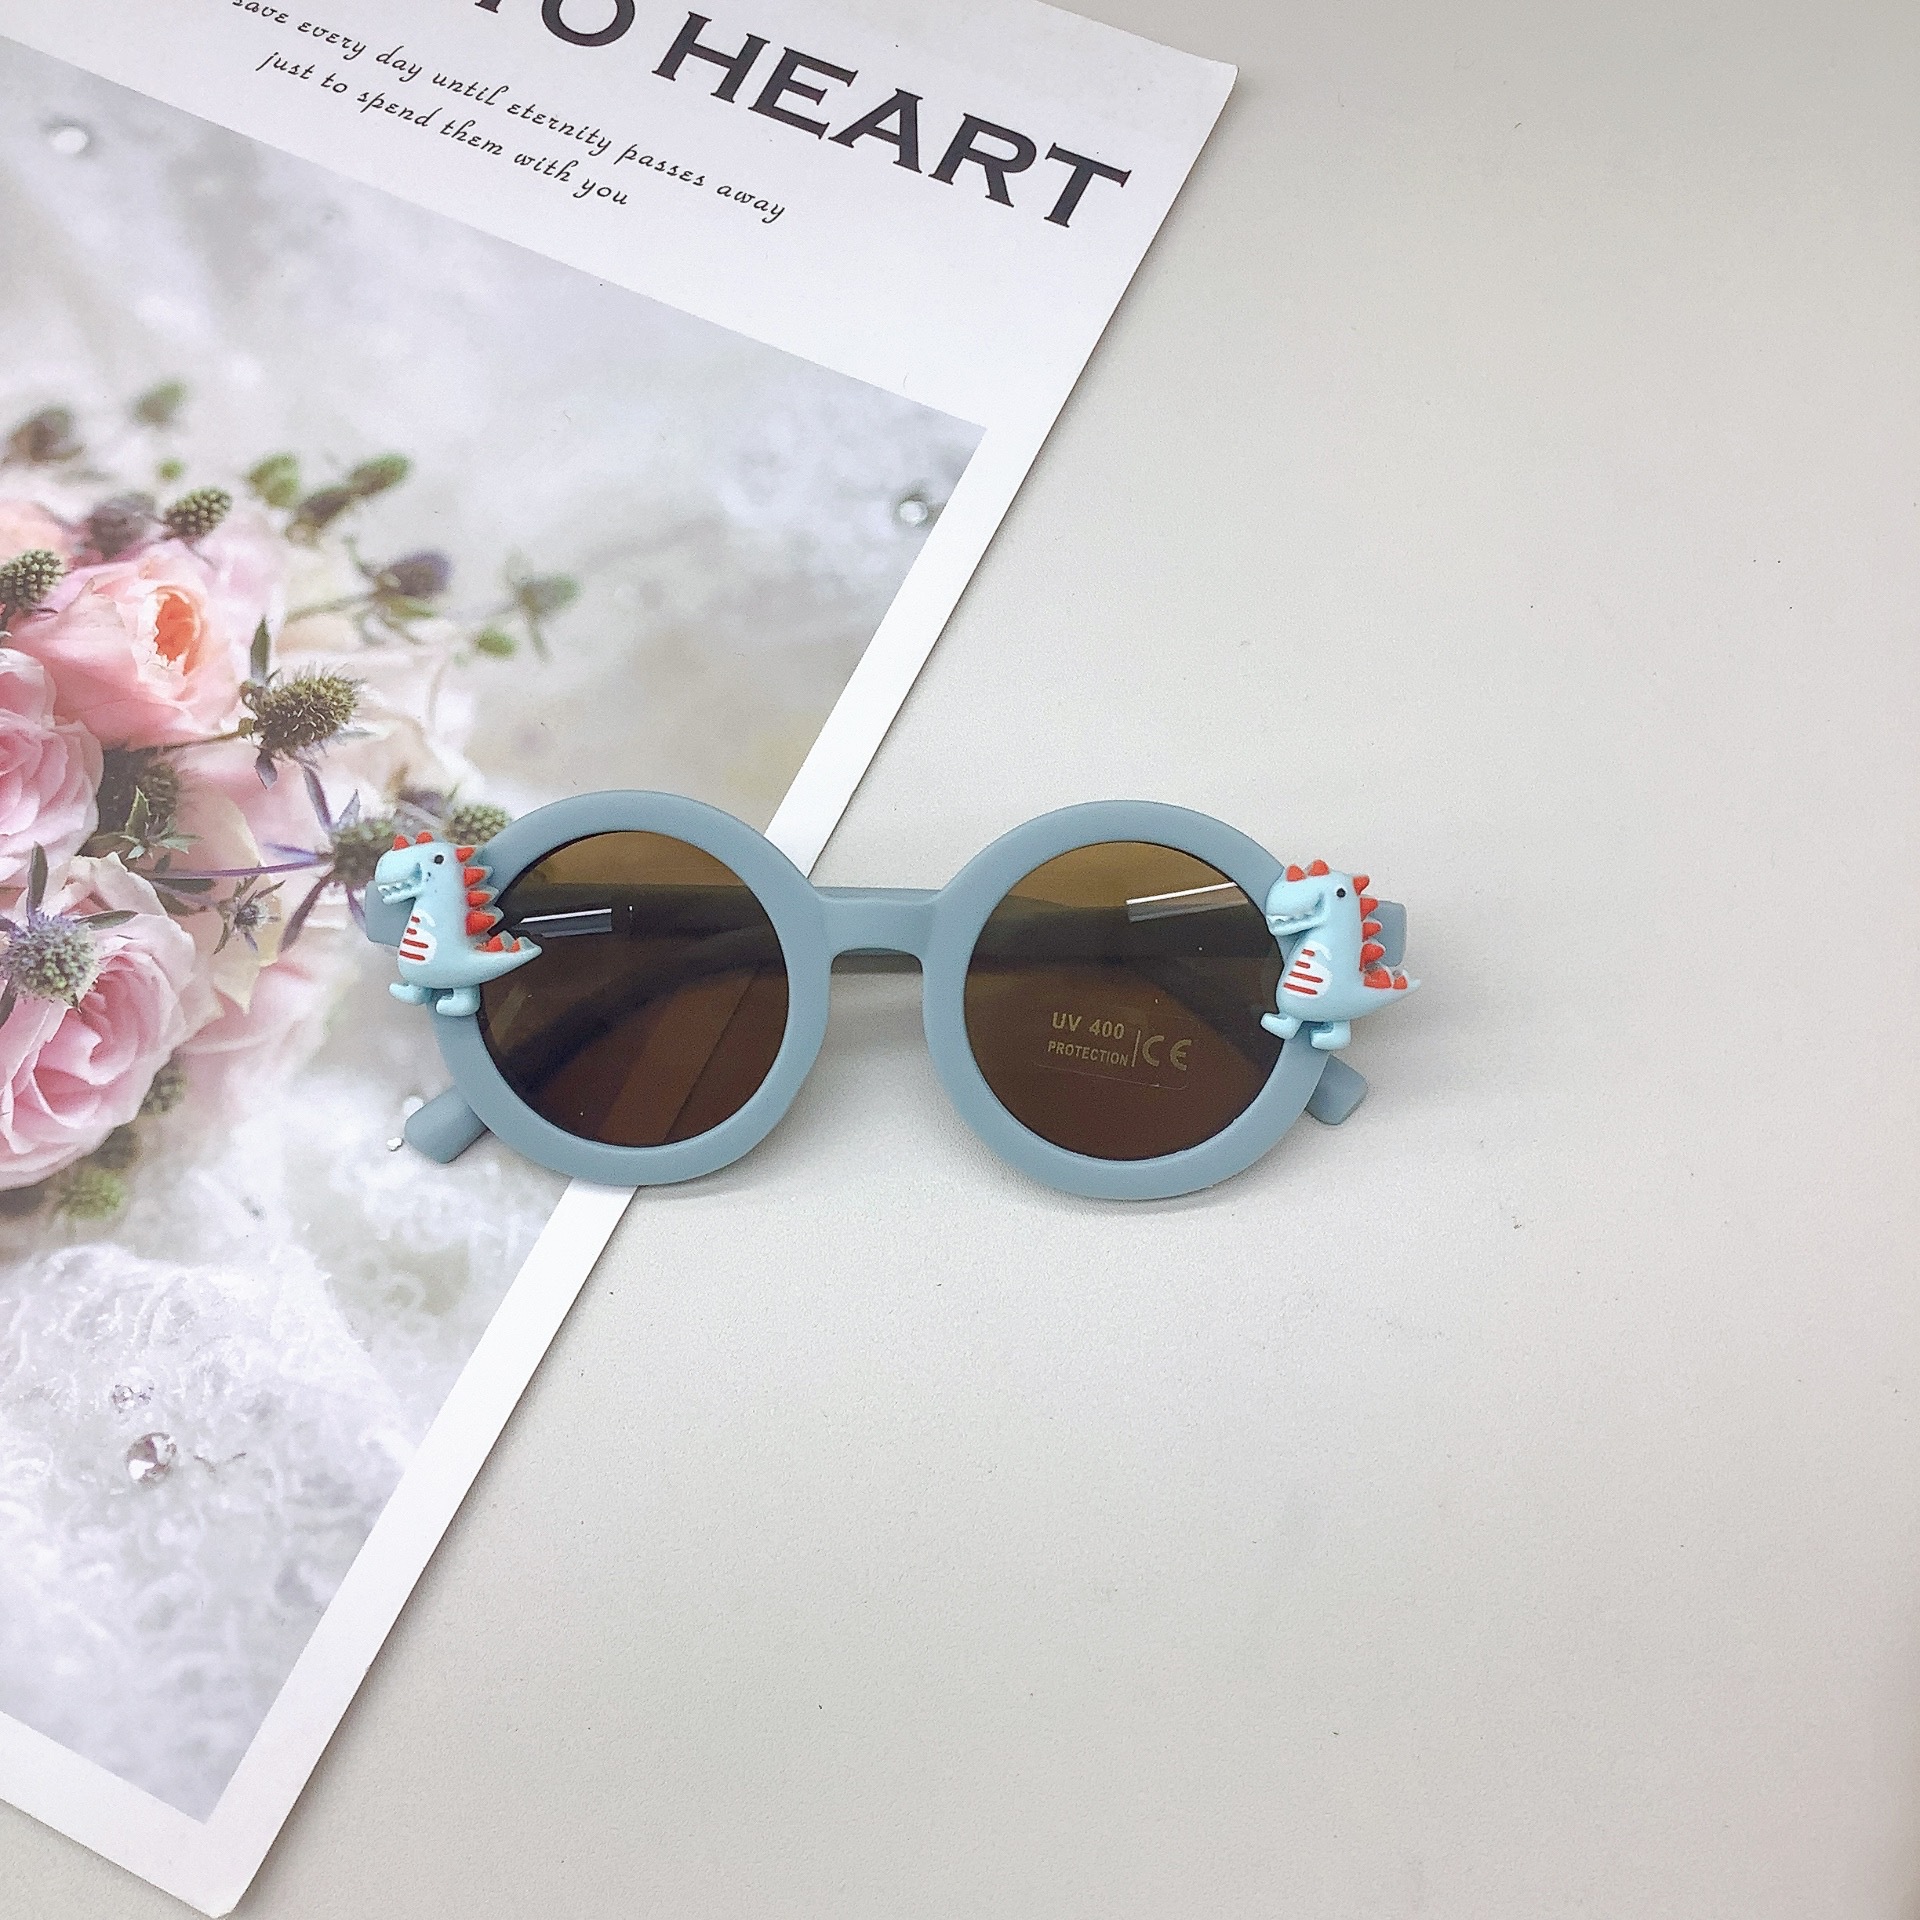 New Stylish round Kid's Eyewear Korean Style Little Bear Accessories Baby Cute Sun-Proof Sunglasses Sunglasses